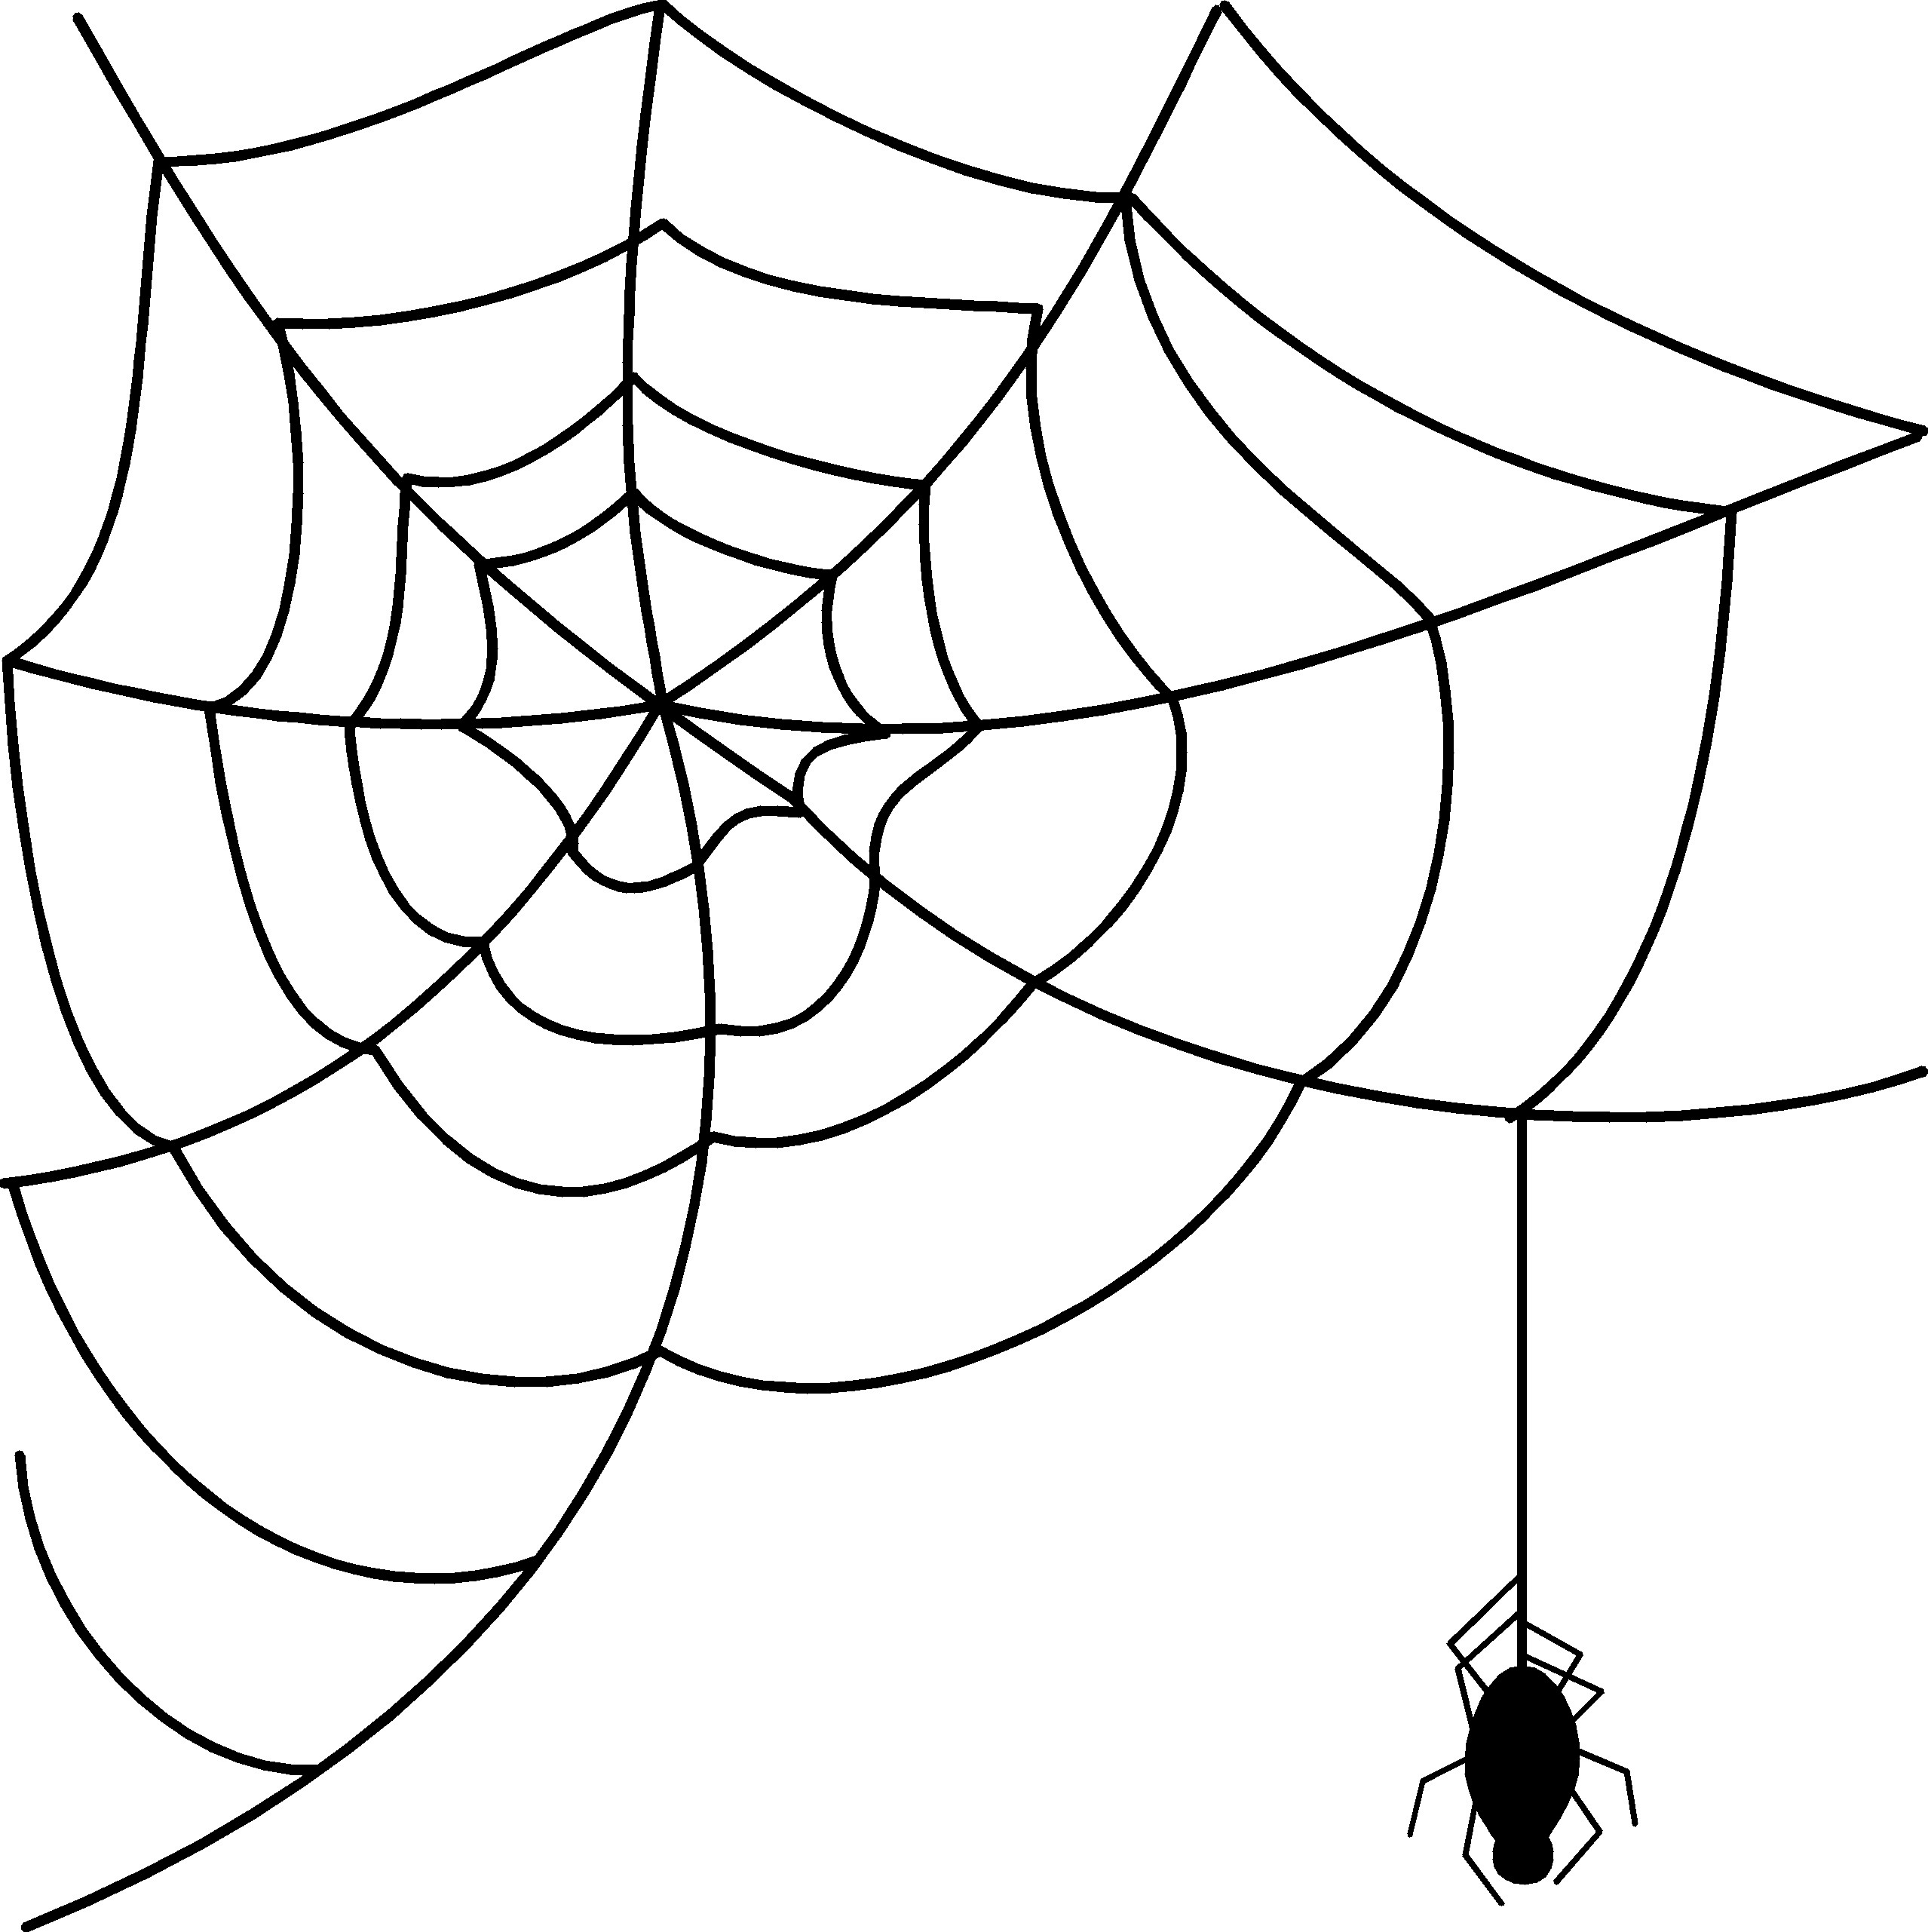 Clipart Spider Web - Cliparts.co